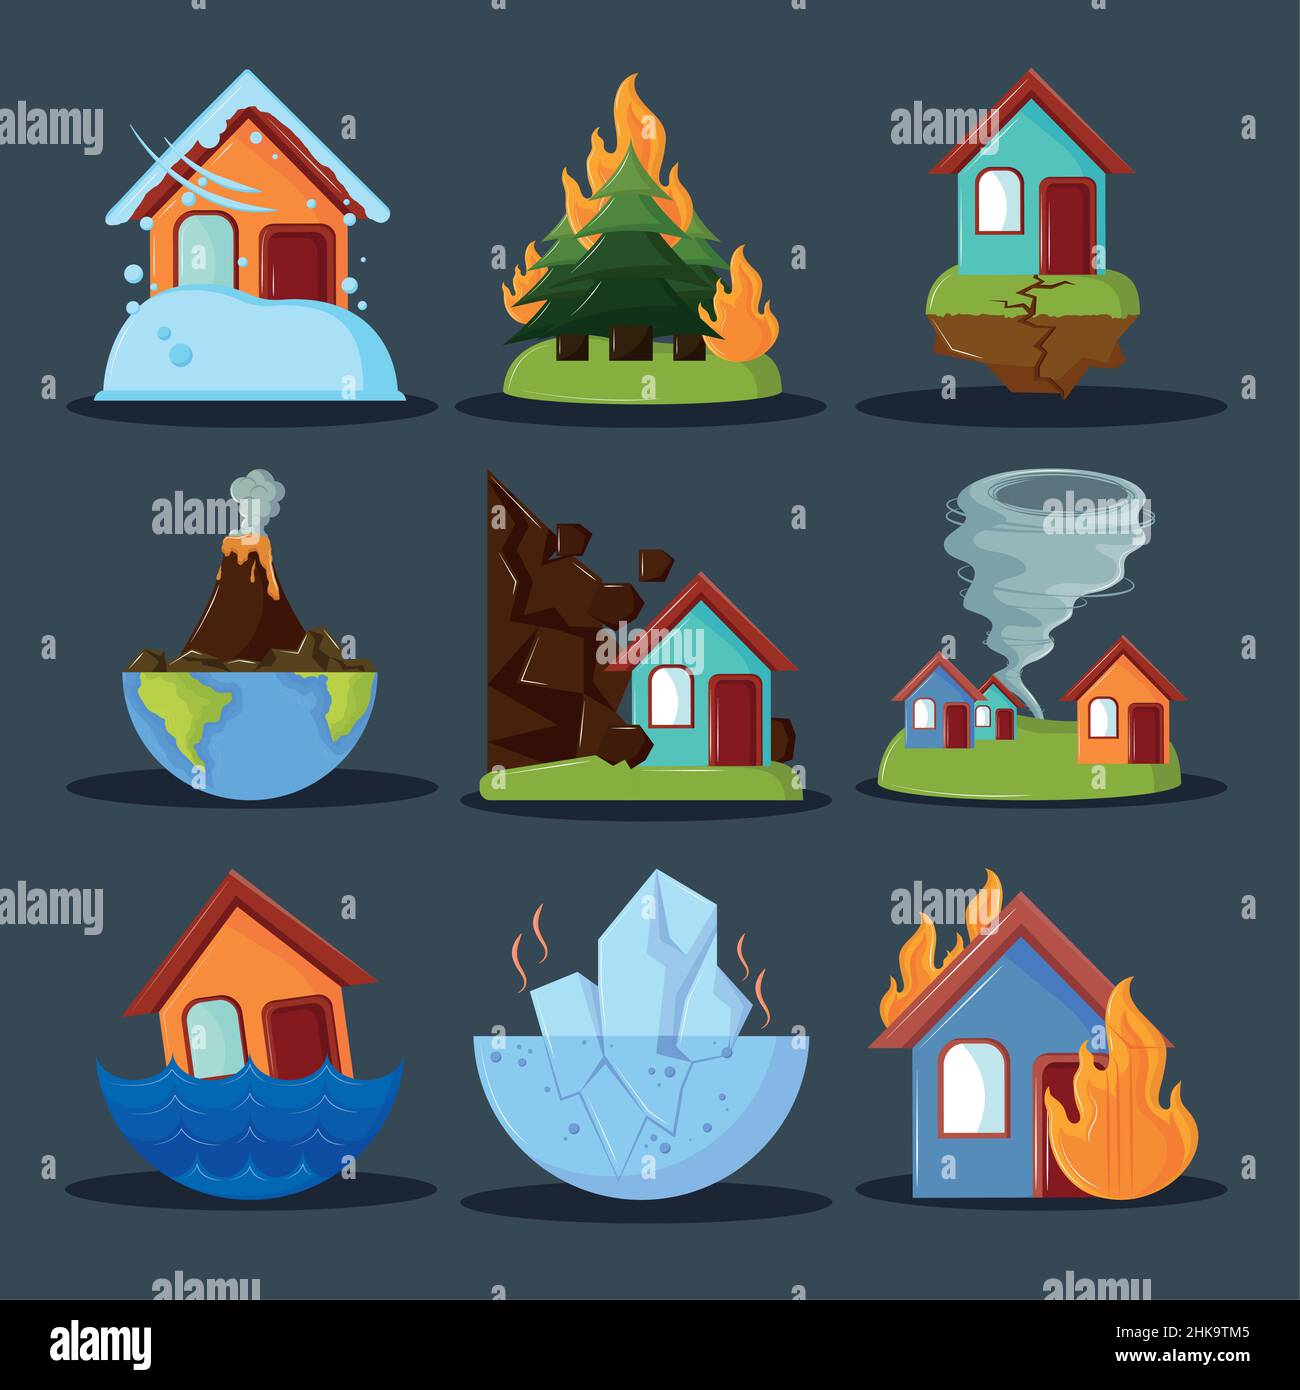 dibujos animados de desastres naturales Imagen Vector de stock - Alamy